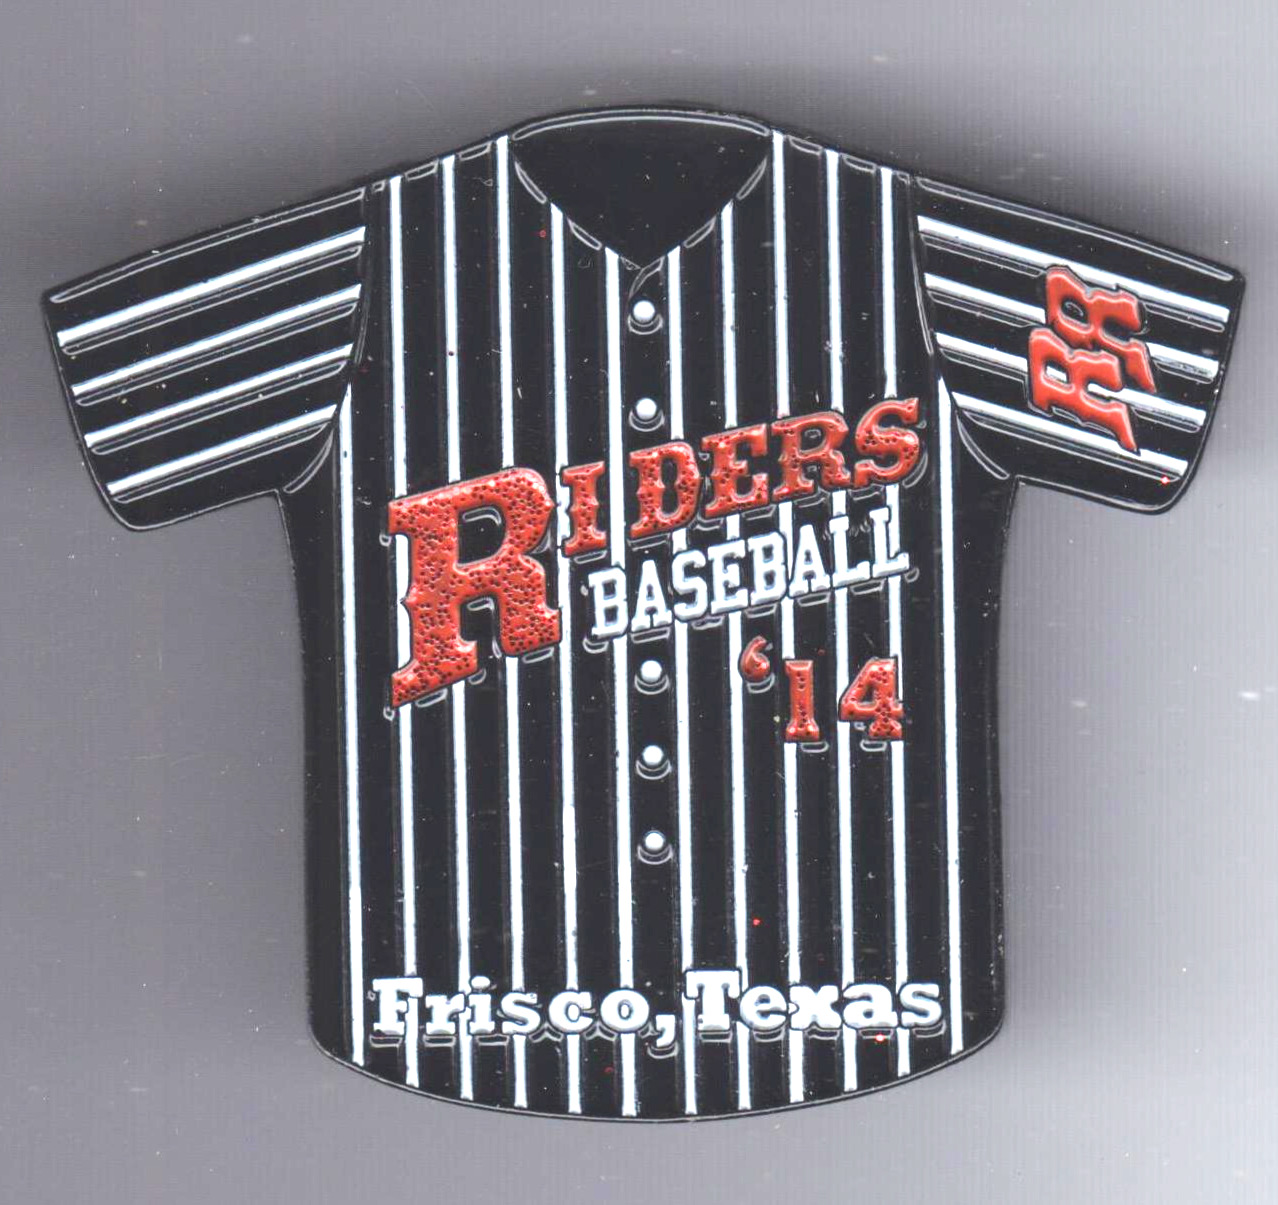 Frisco Texas Riders baseball jersey 2014 RR enamel lapel pin hat tie tack C